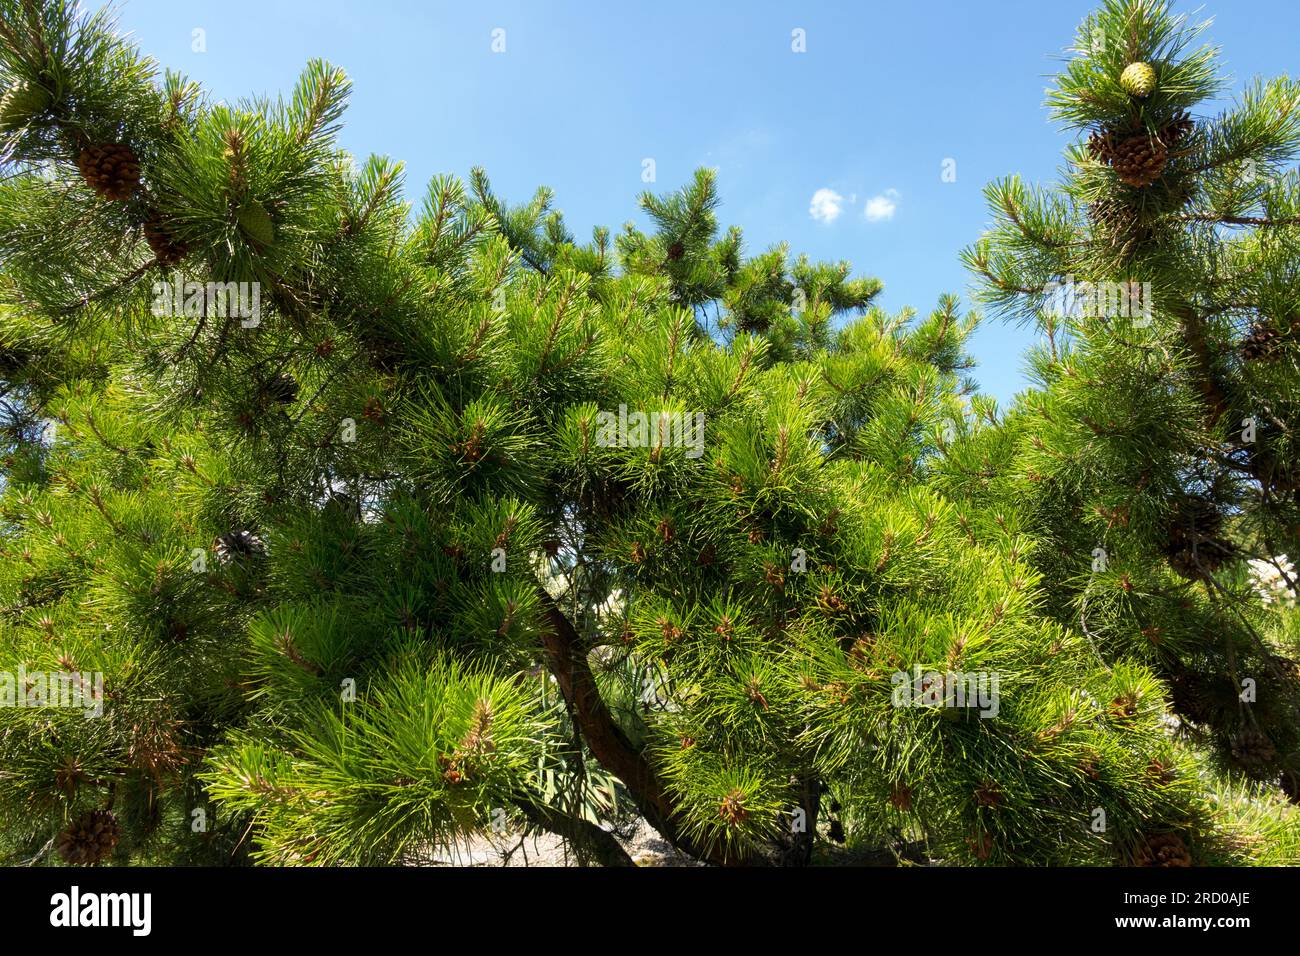 Tree, Pitch Pine, Pinus rigida, Foliage, Branches Stock Photo